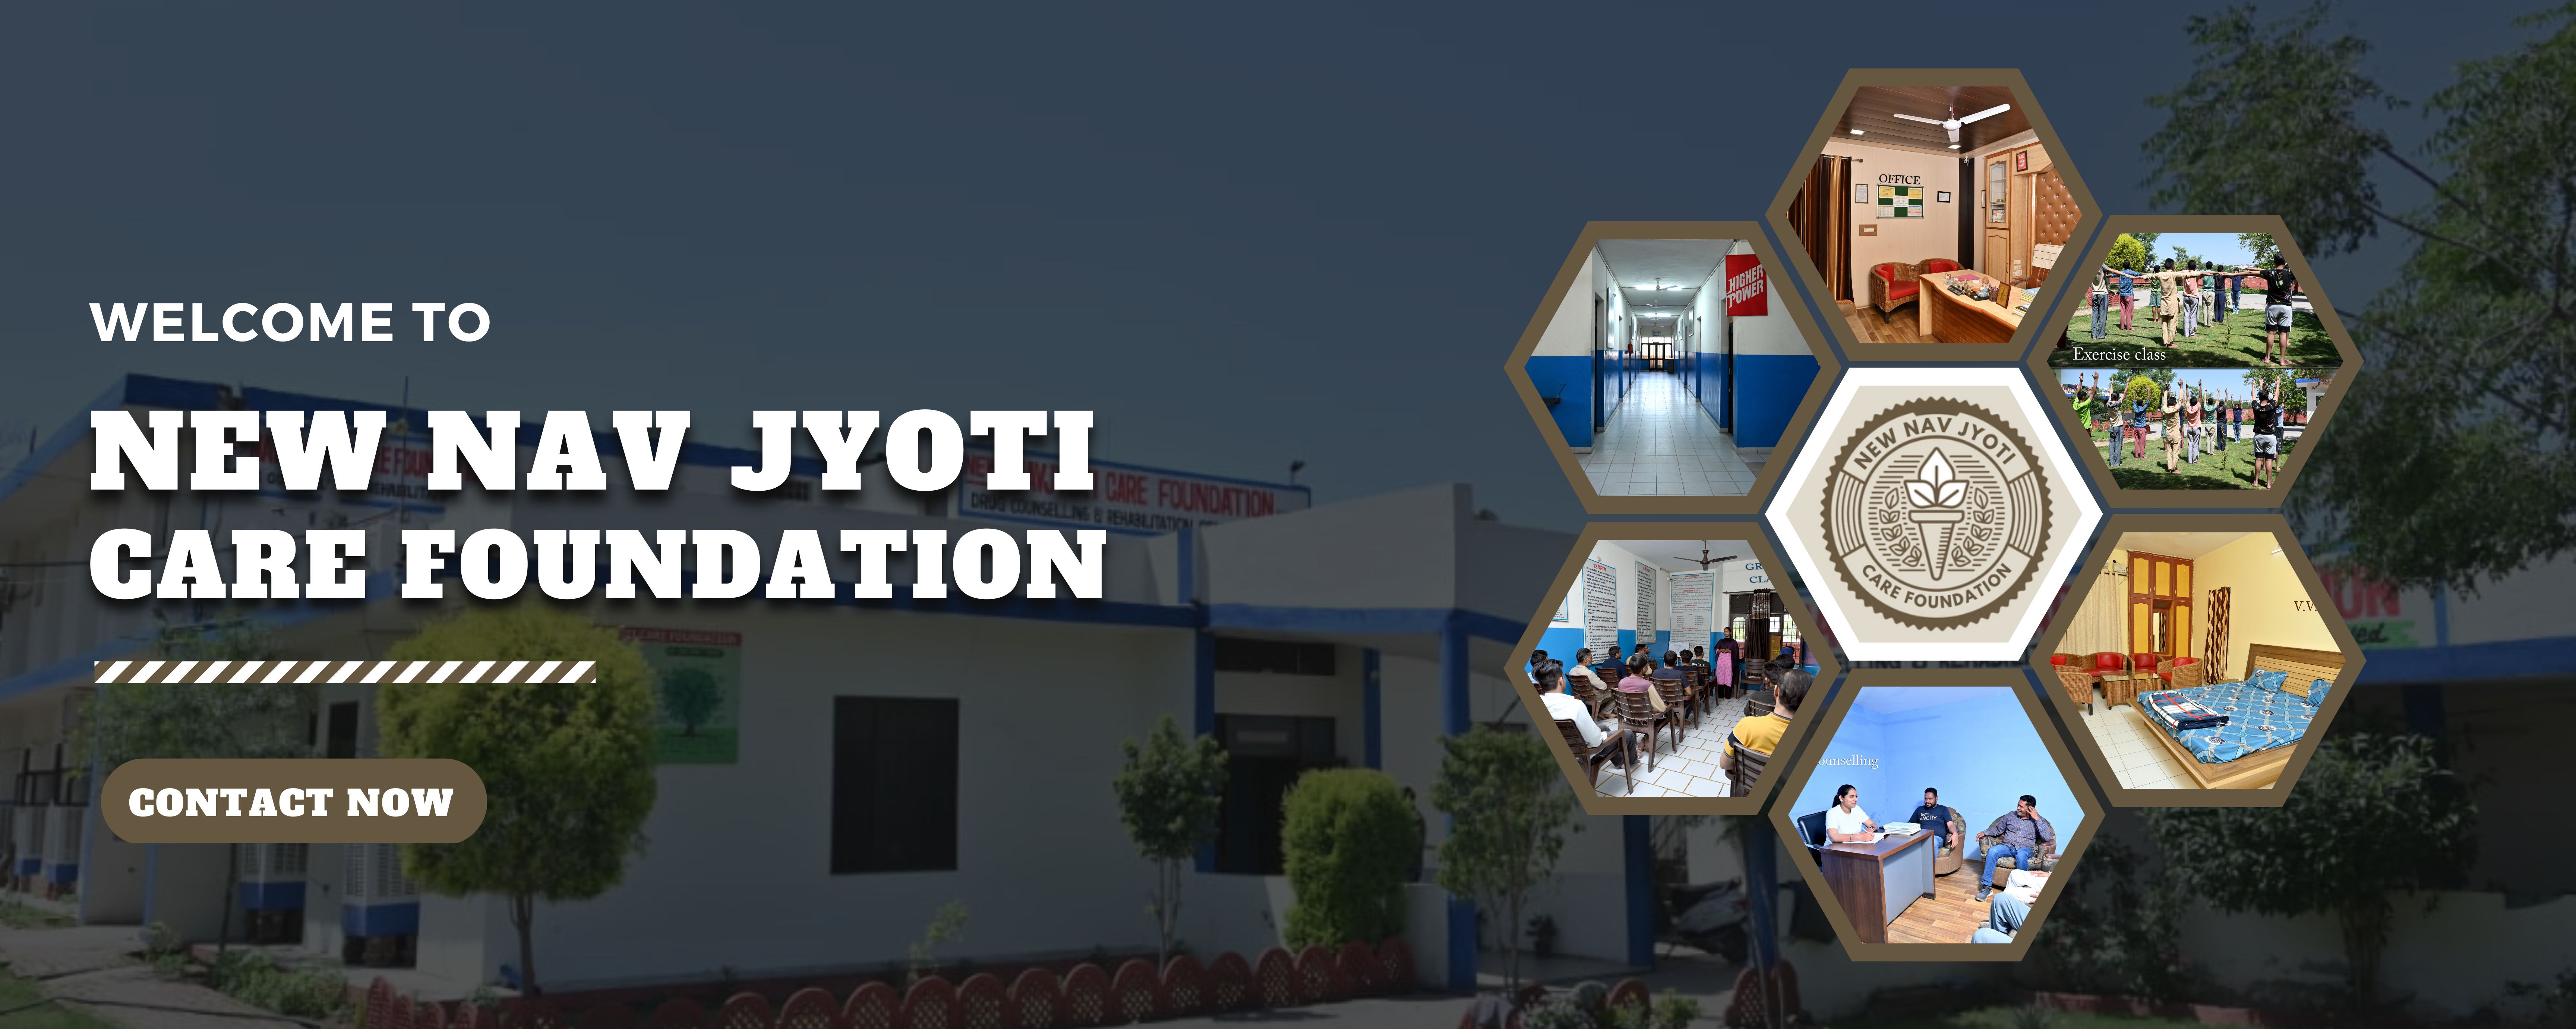 New Navjyoti Care Foundation